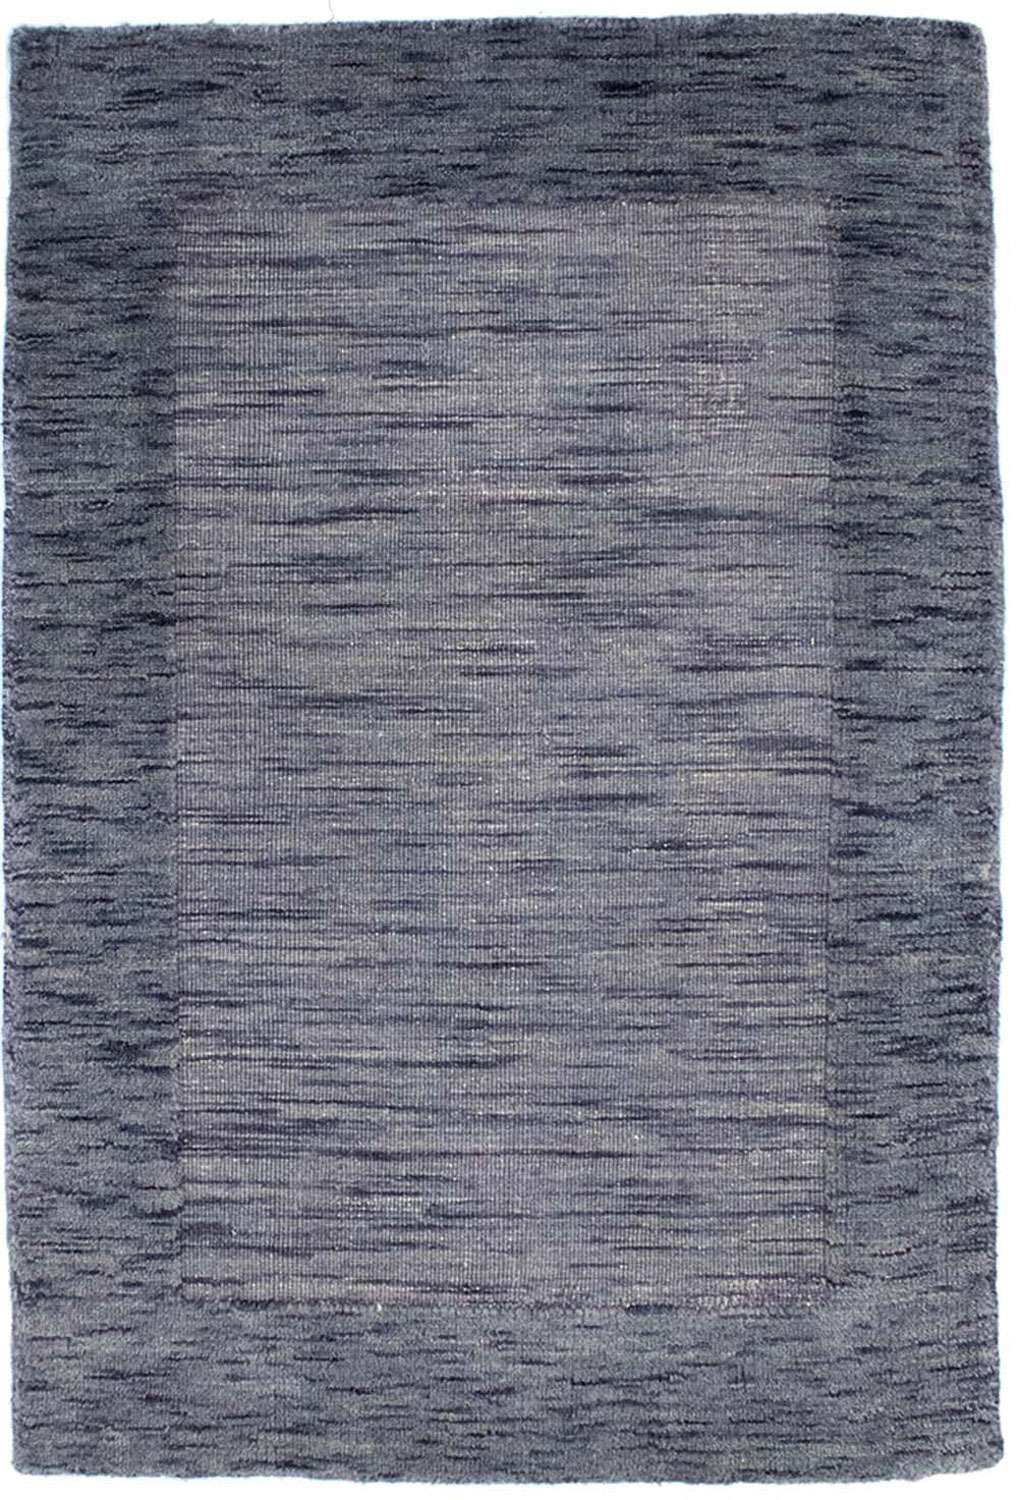 Wool Rug - 90 x 60 cm - multicolored